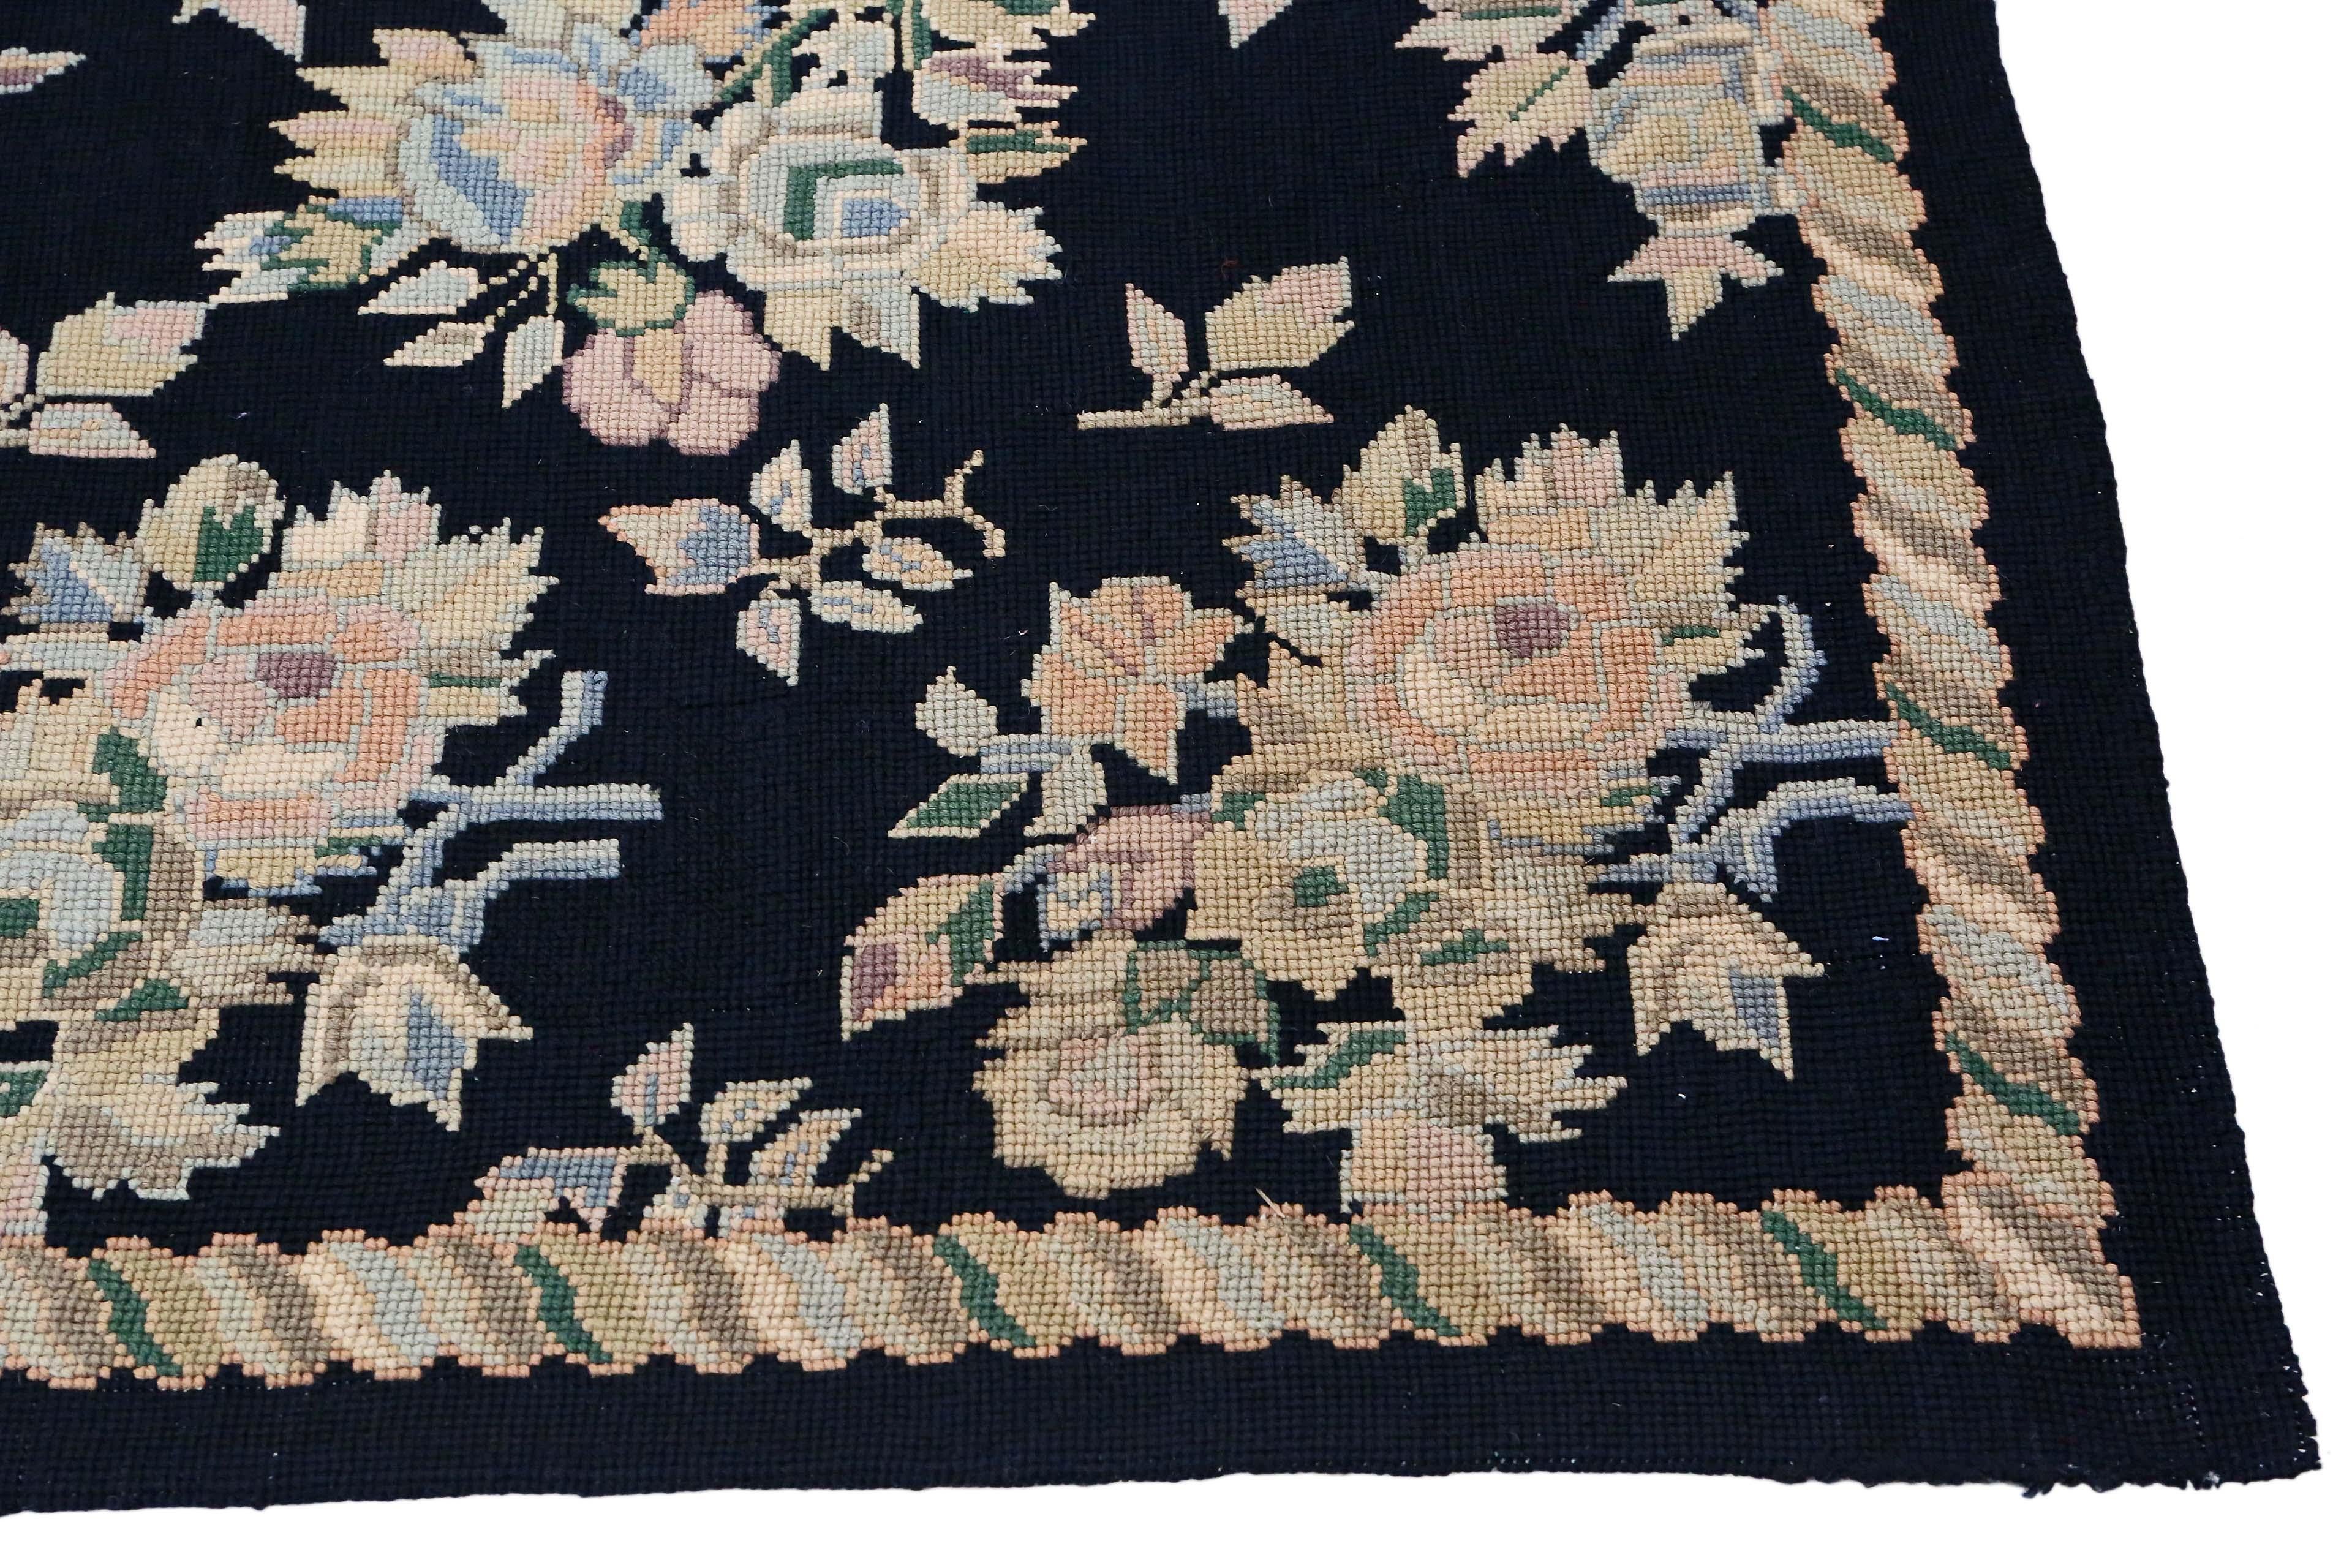 Antique large quality William Morris style needlepoint rug carpet, measures: 8'6